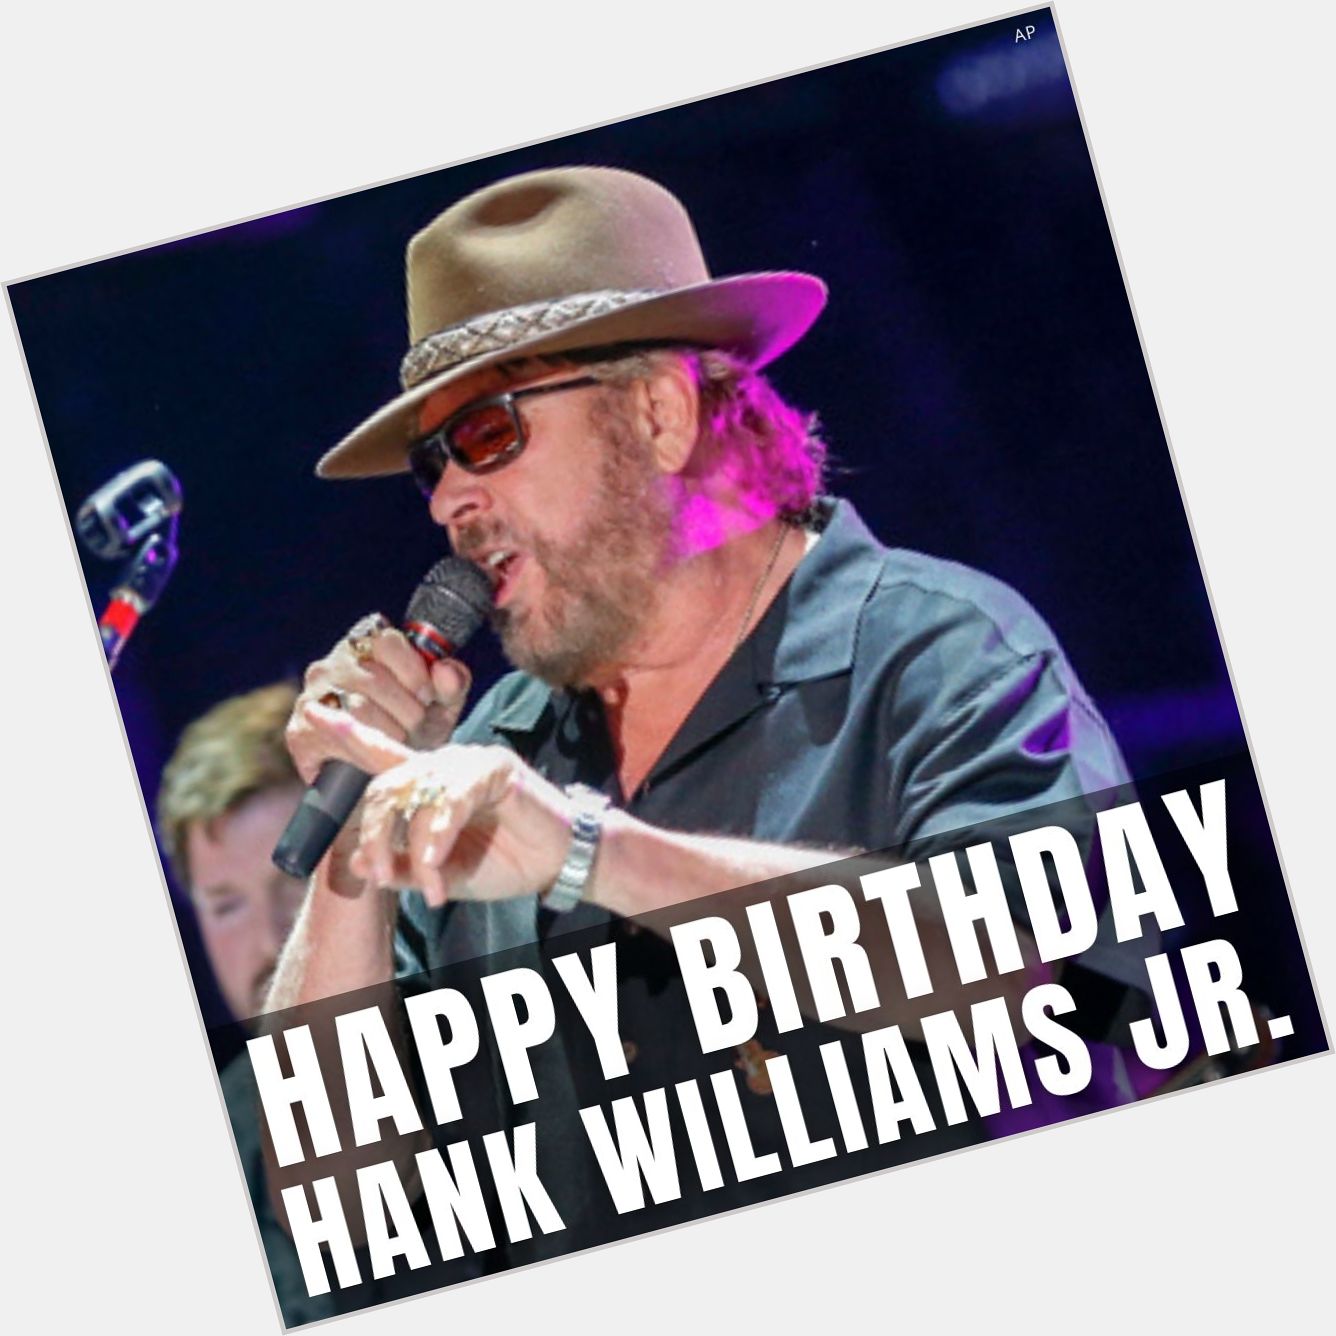 HAPPY BIRTHDAY! Hank Williams Jr. turns 72 today. 